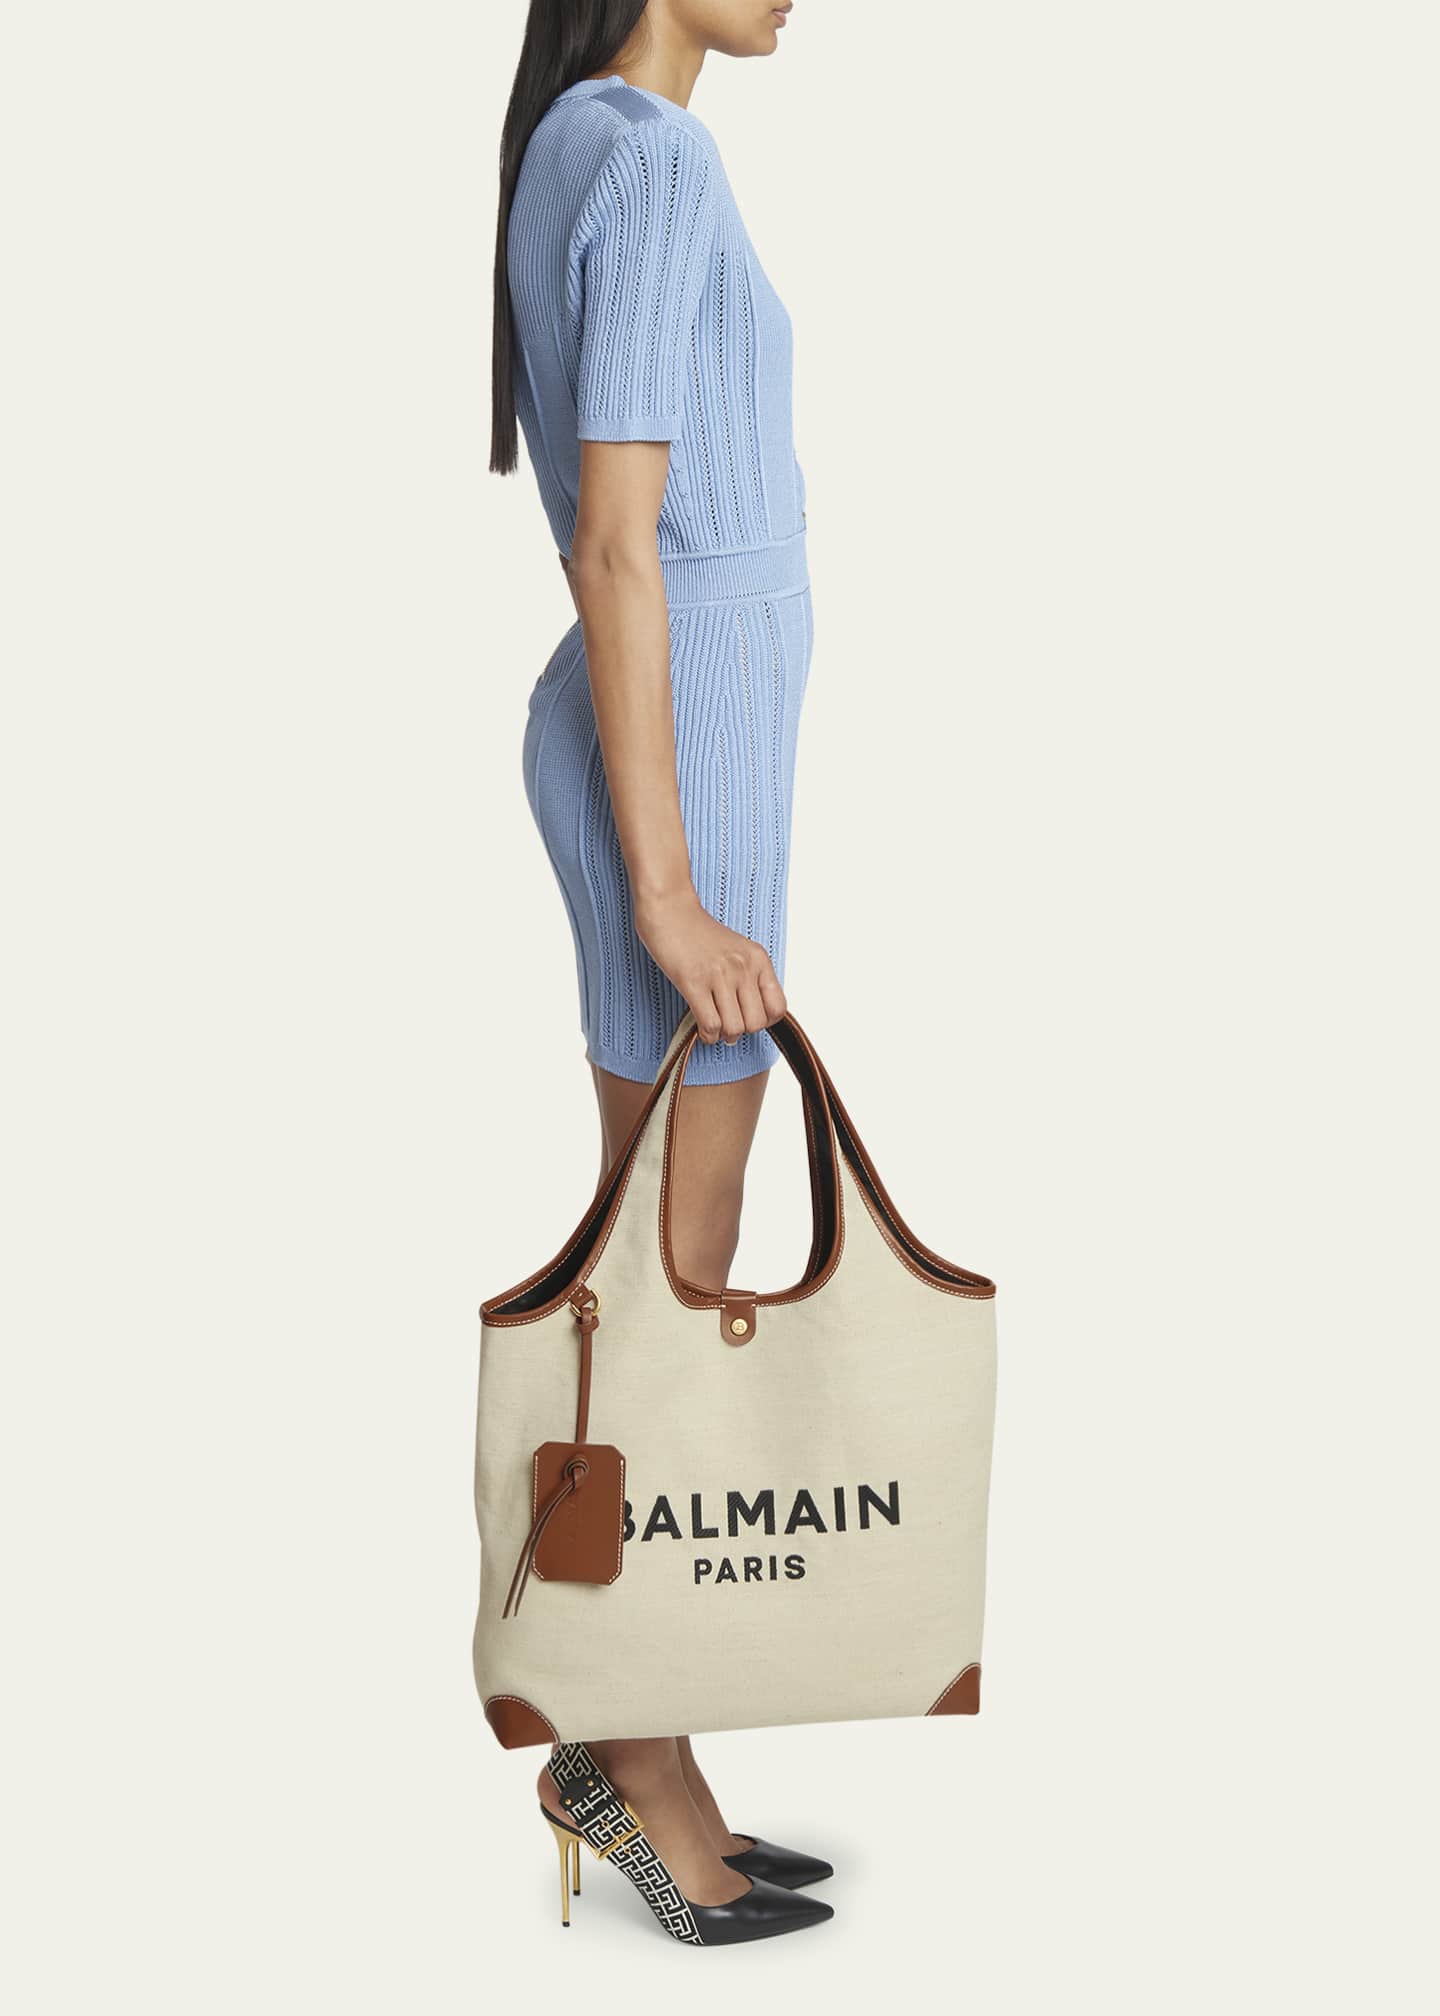 Balmain B Army Logo Canvas Shopper Tote Bag - Bergdorf Goodman